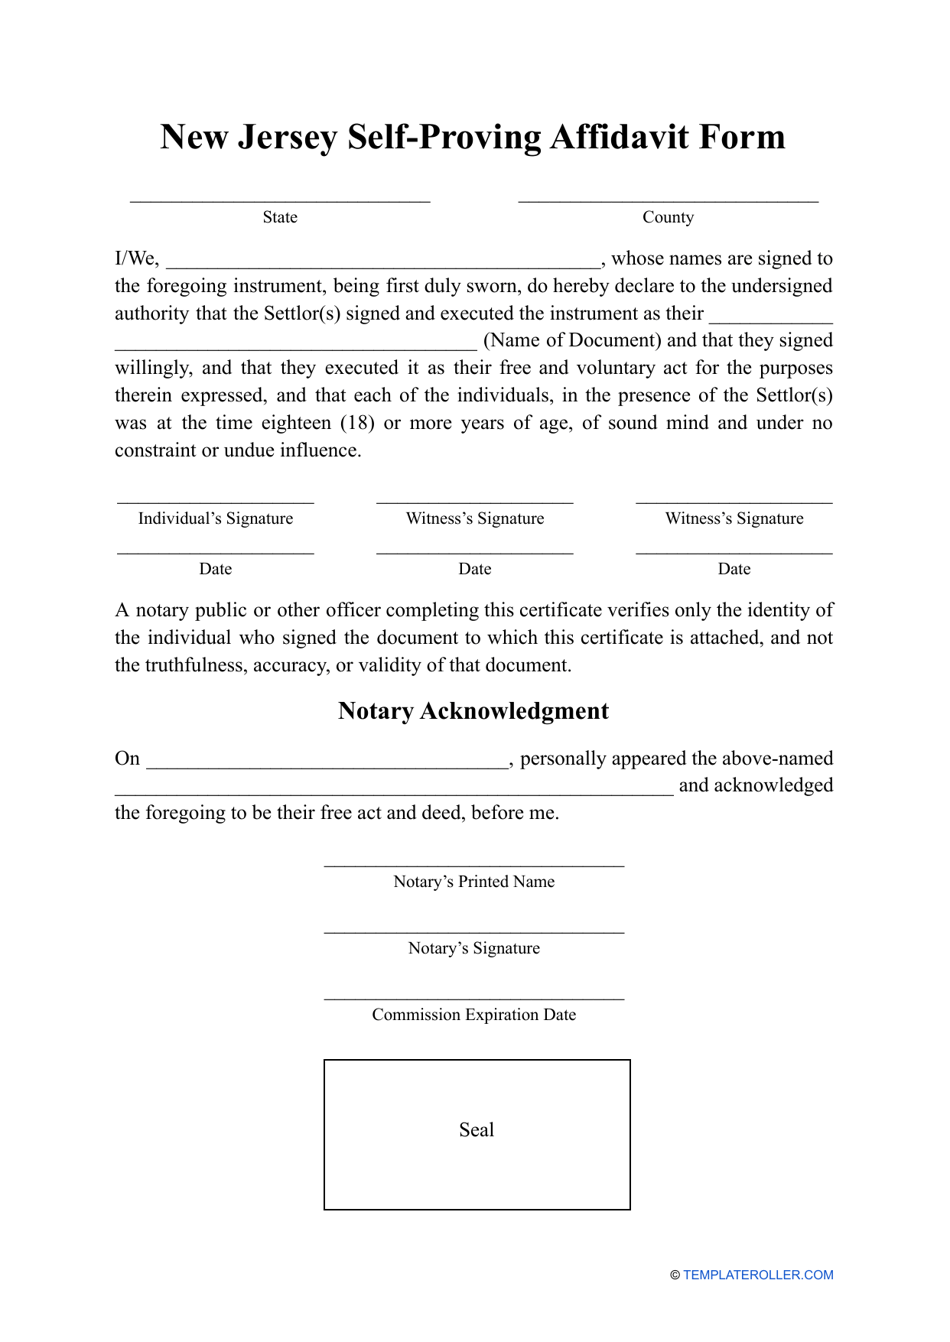 Self-proving Affidavit Form - New Jersey, Page 1